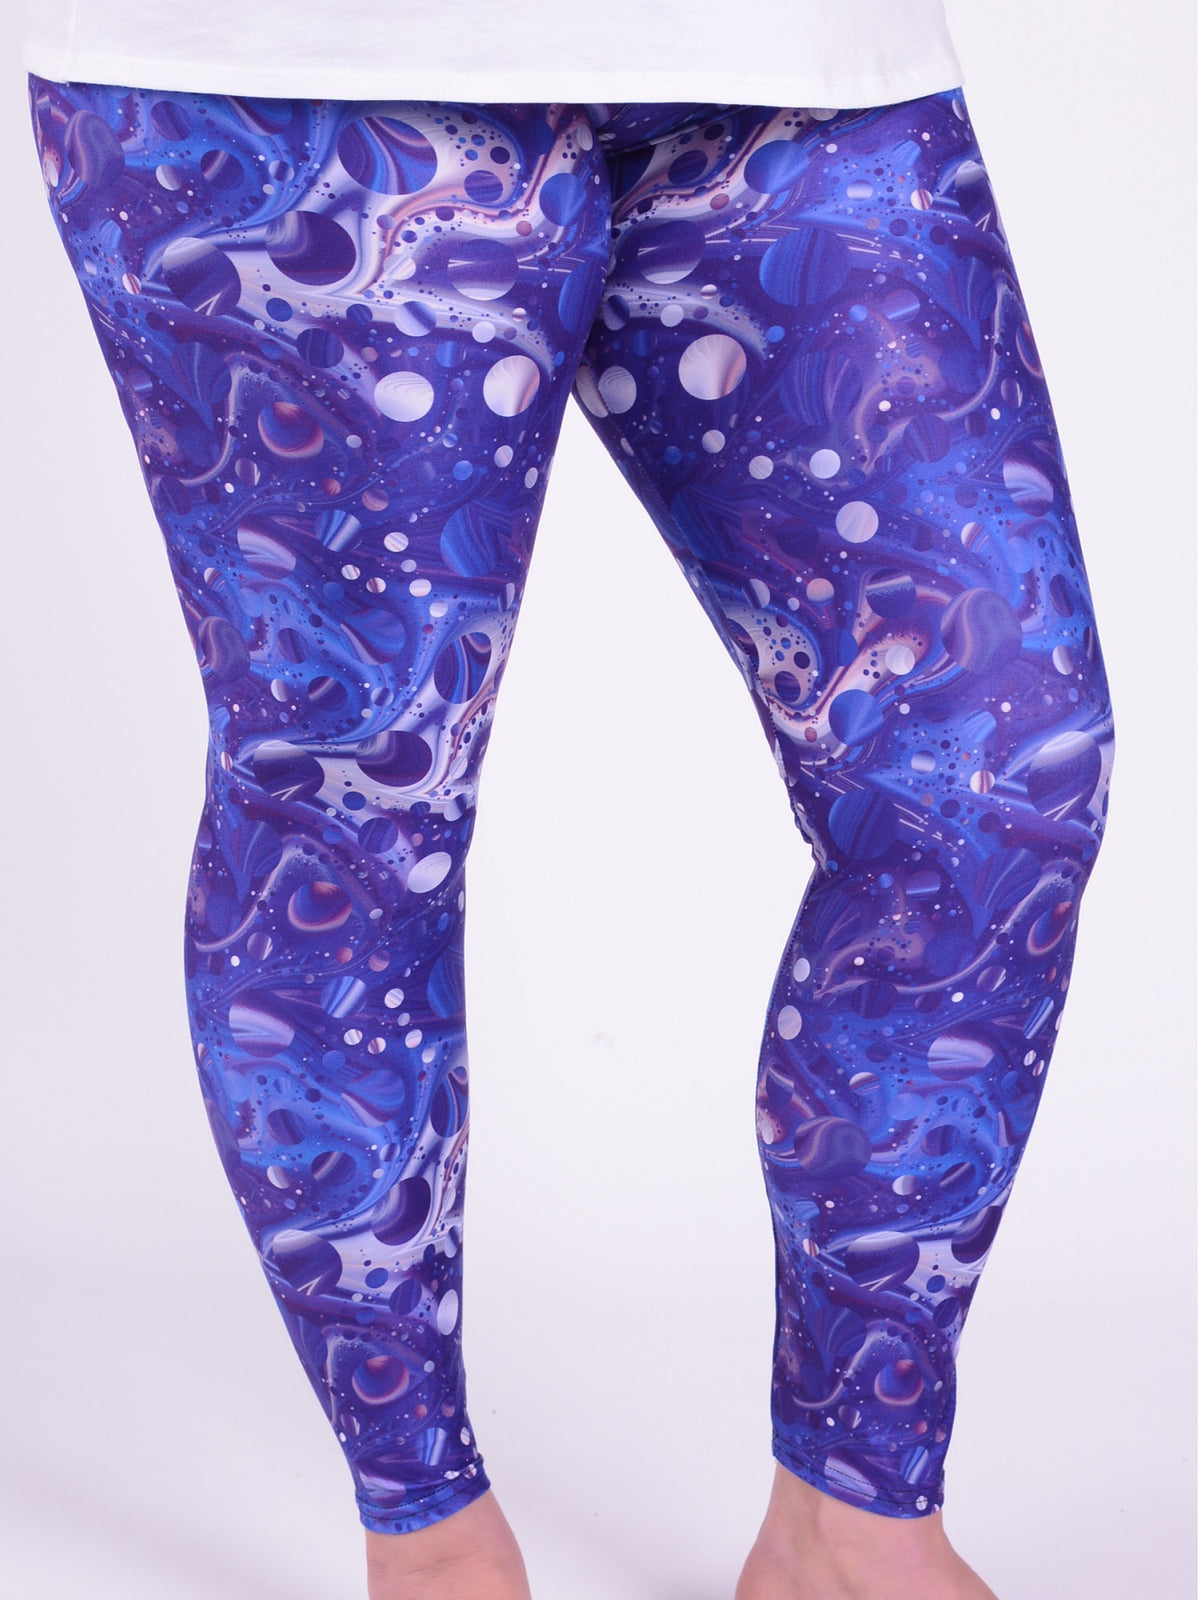 Leggings  - Purple Bubbles - L58, Trousers, Pure Plus Clothing, Lagenlook Clothing, Plus Size Fashion, Over 50 Fashion